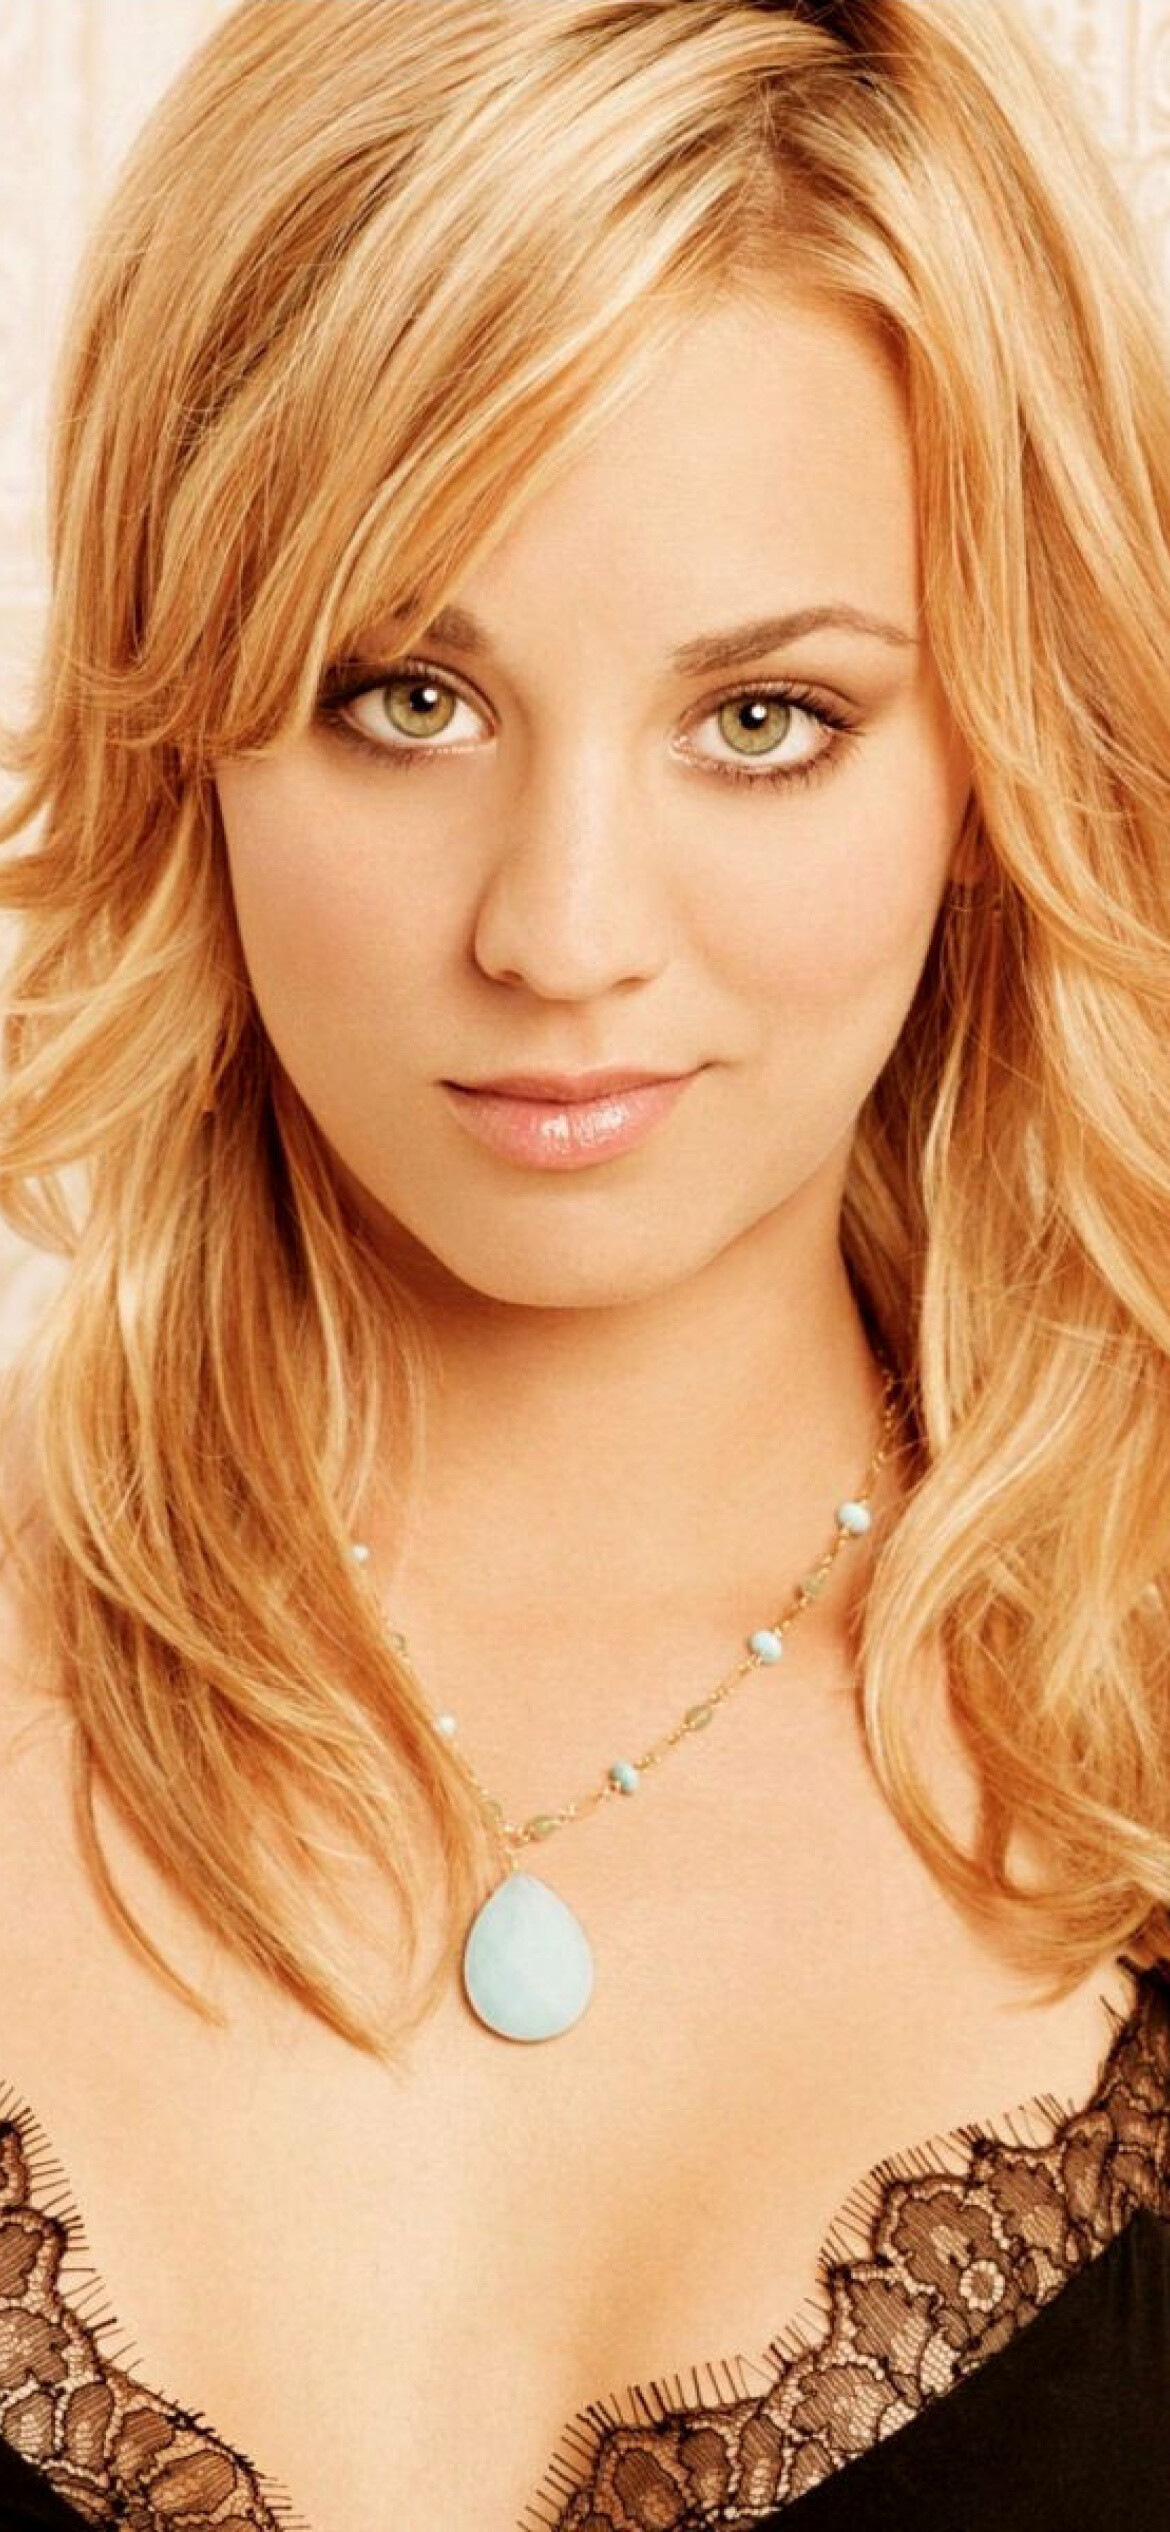 The Big Bang Theory: Kaley Cuoco as Penny, An aspiring actress from Omaha, Nebraska. 1170x2540 HD Background.